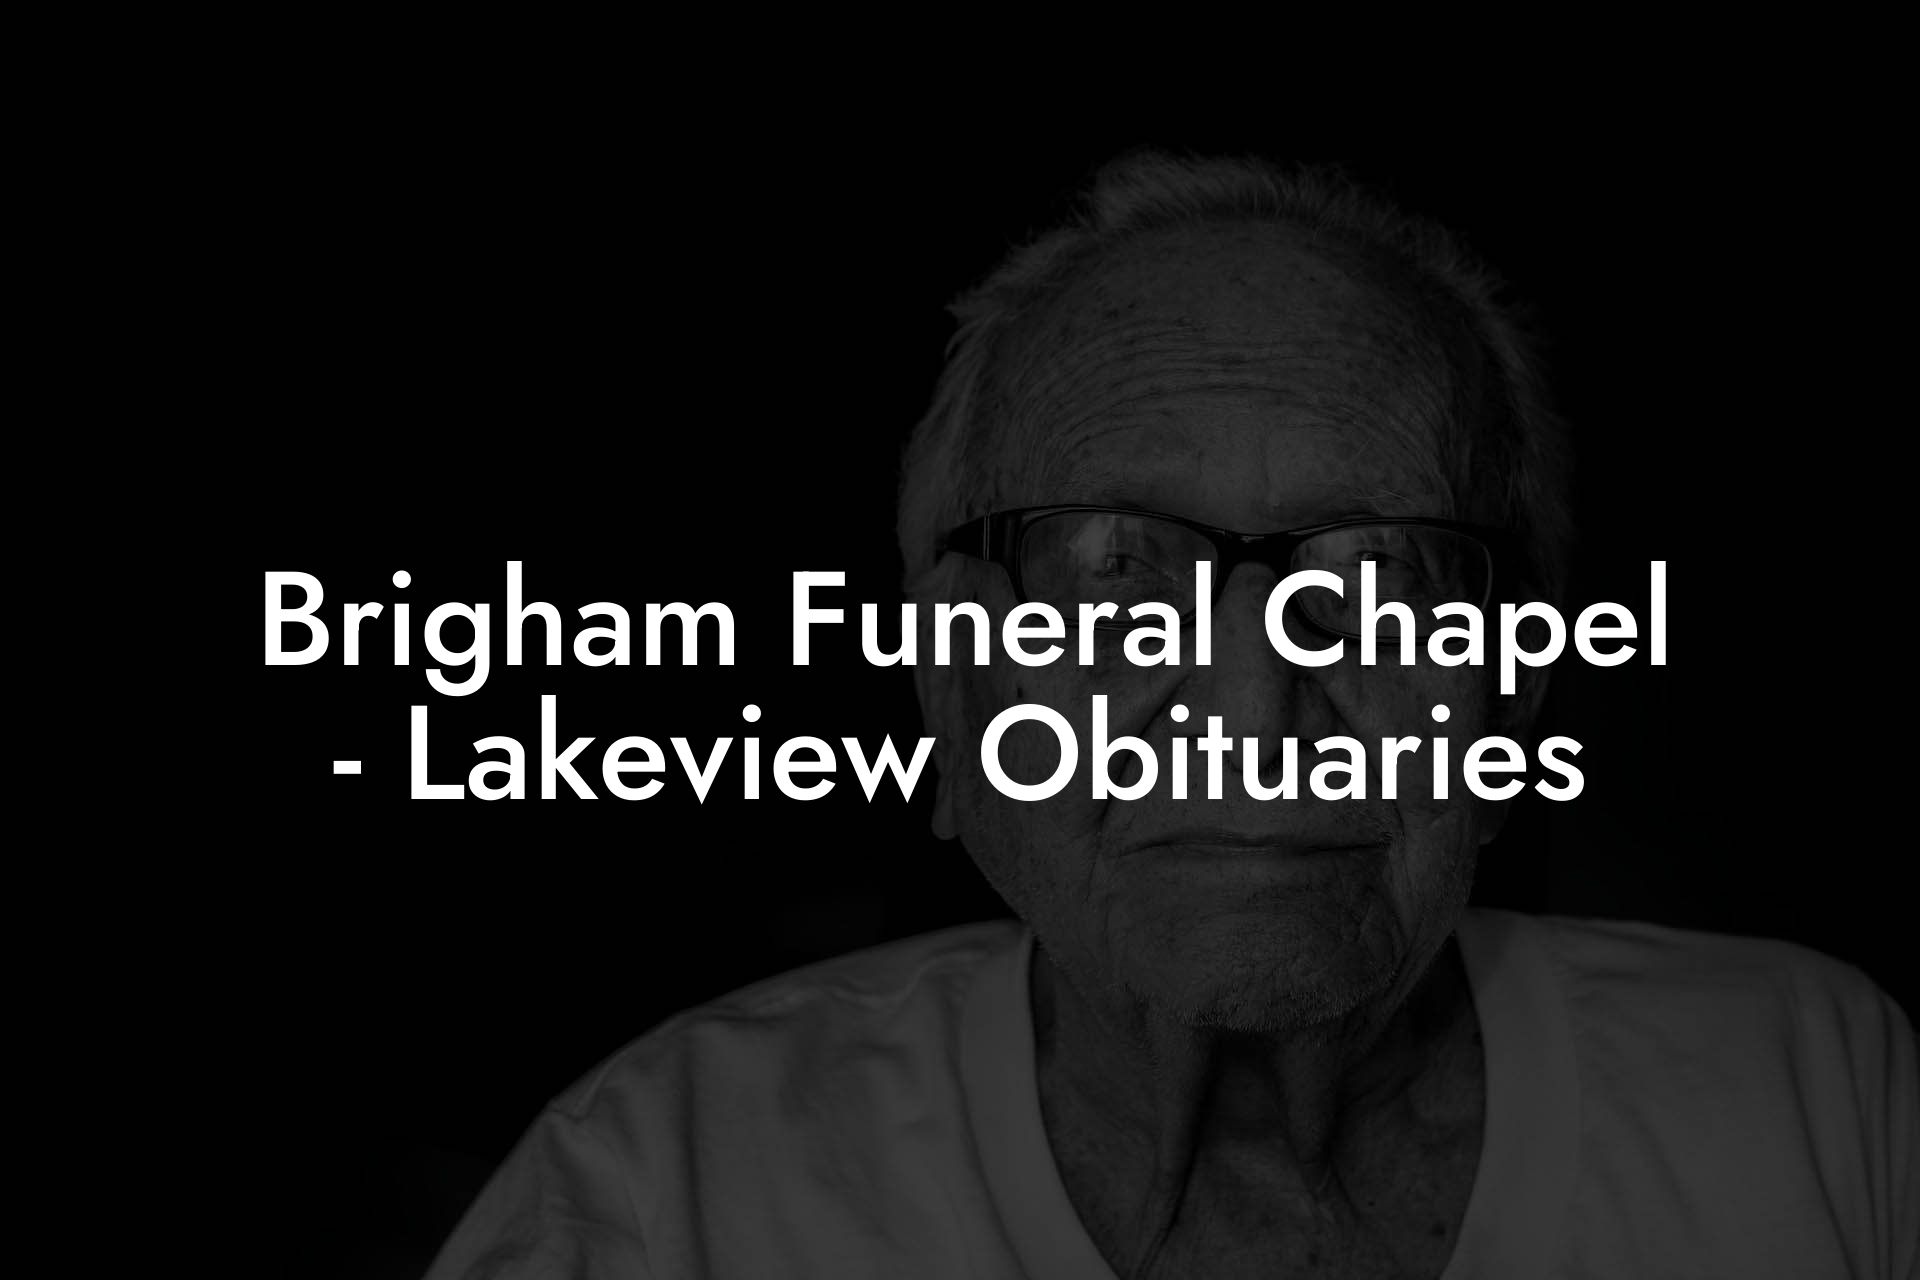 Brigham Funeral Chapel - Lakeview Obituaries